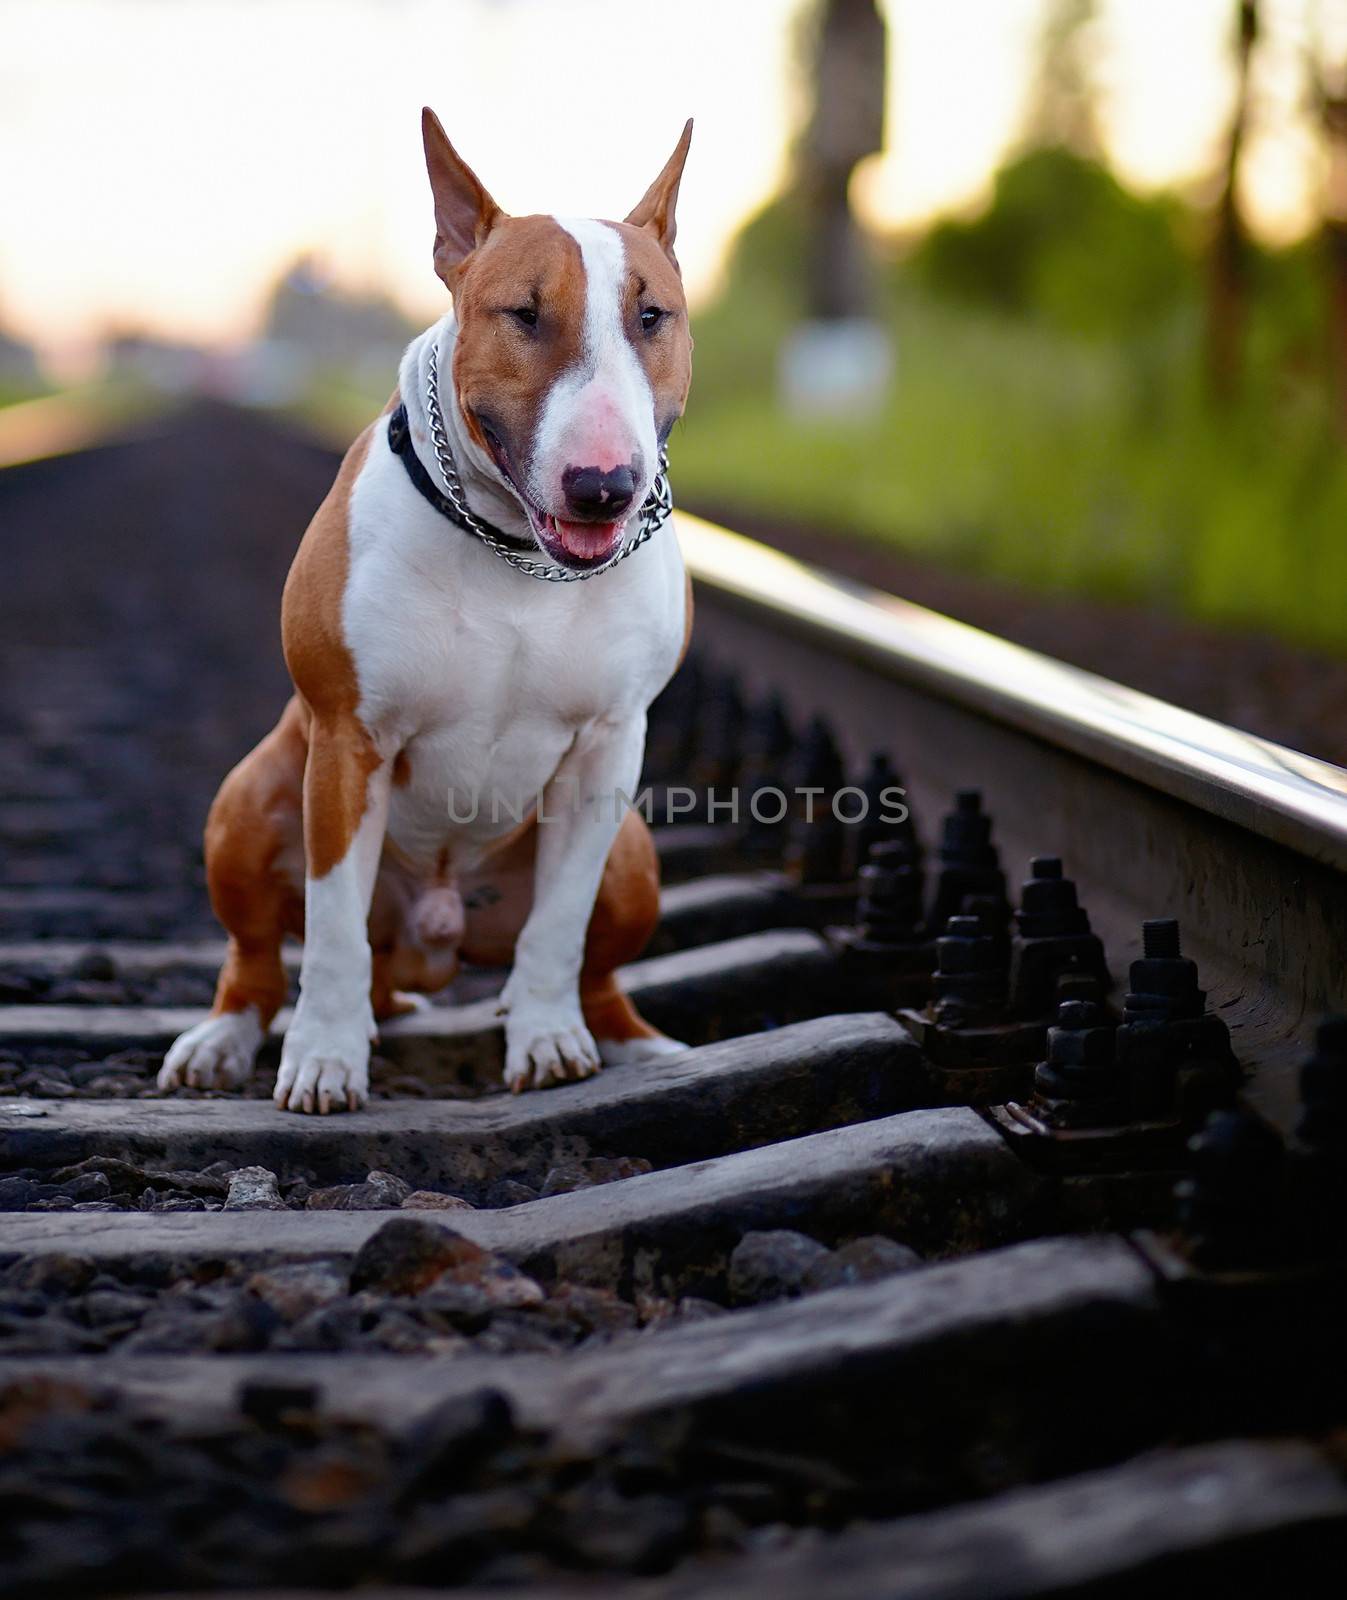 English bull terrier. Thoroughbred dog. Canine friend. Red dog. Bull terrier on rails. Bull terrier and railroad.